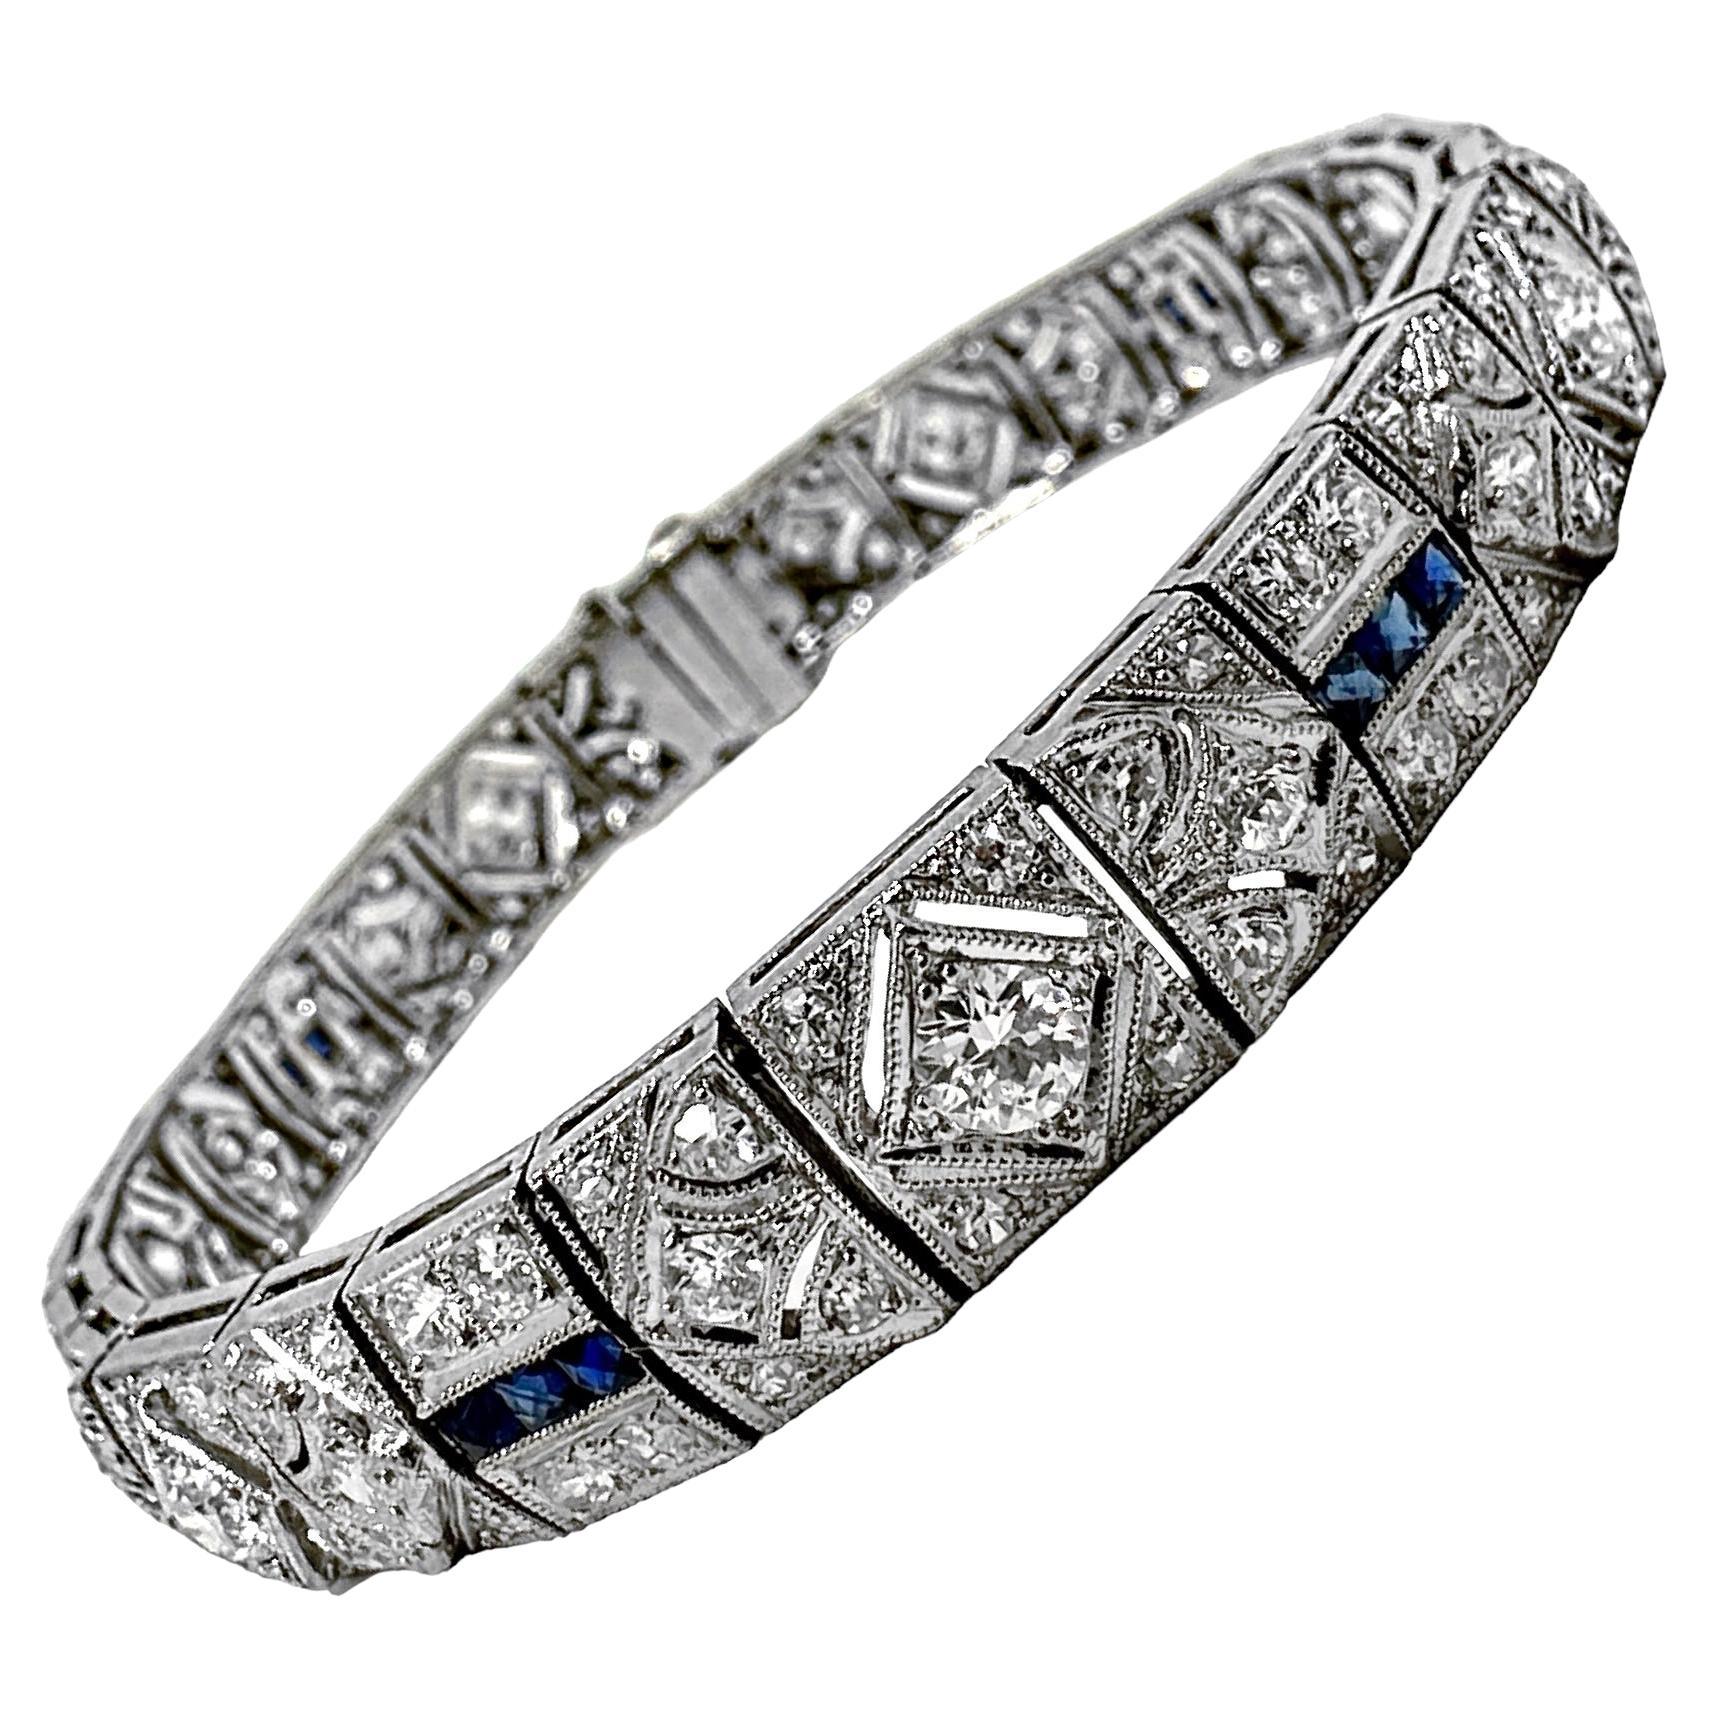 Charming Original Art-Deco Period Platinum, Diamond and Sapphire Bracelet